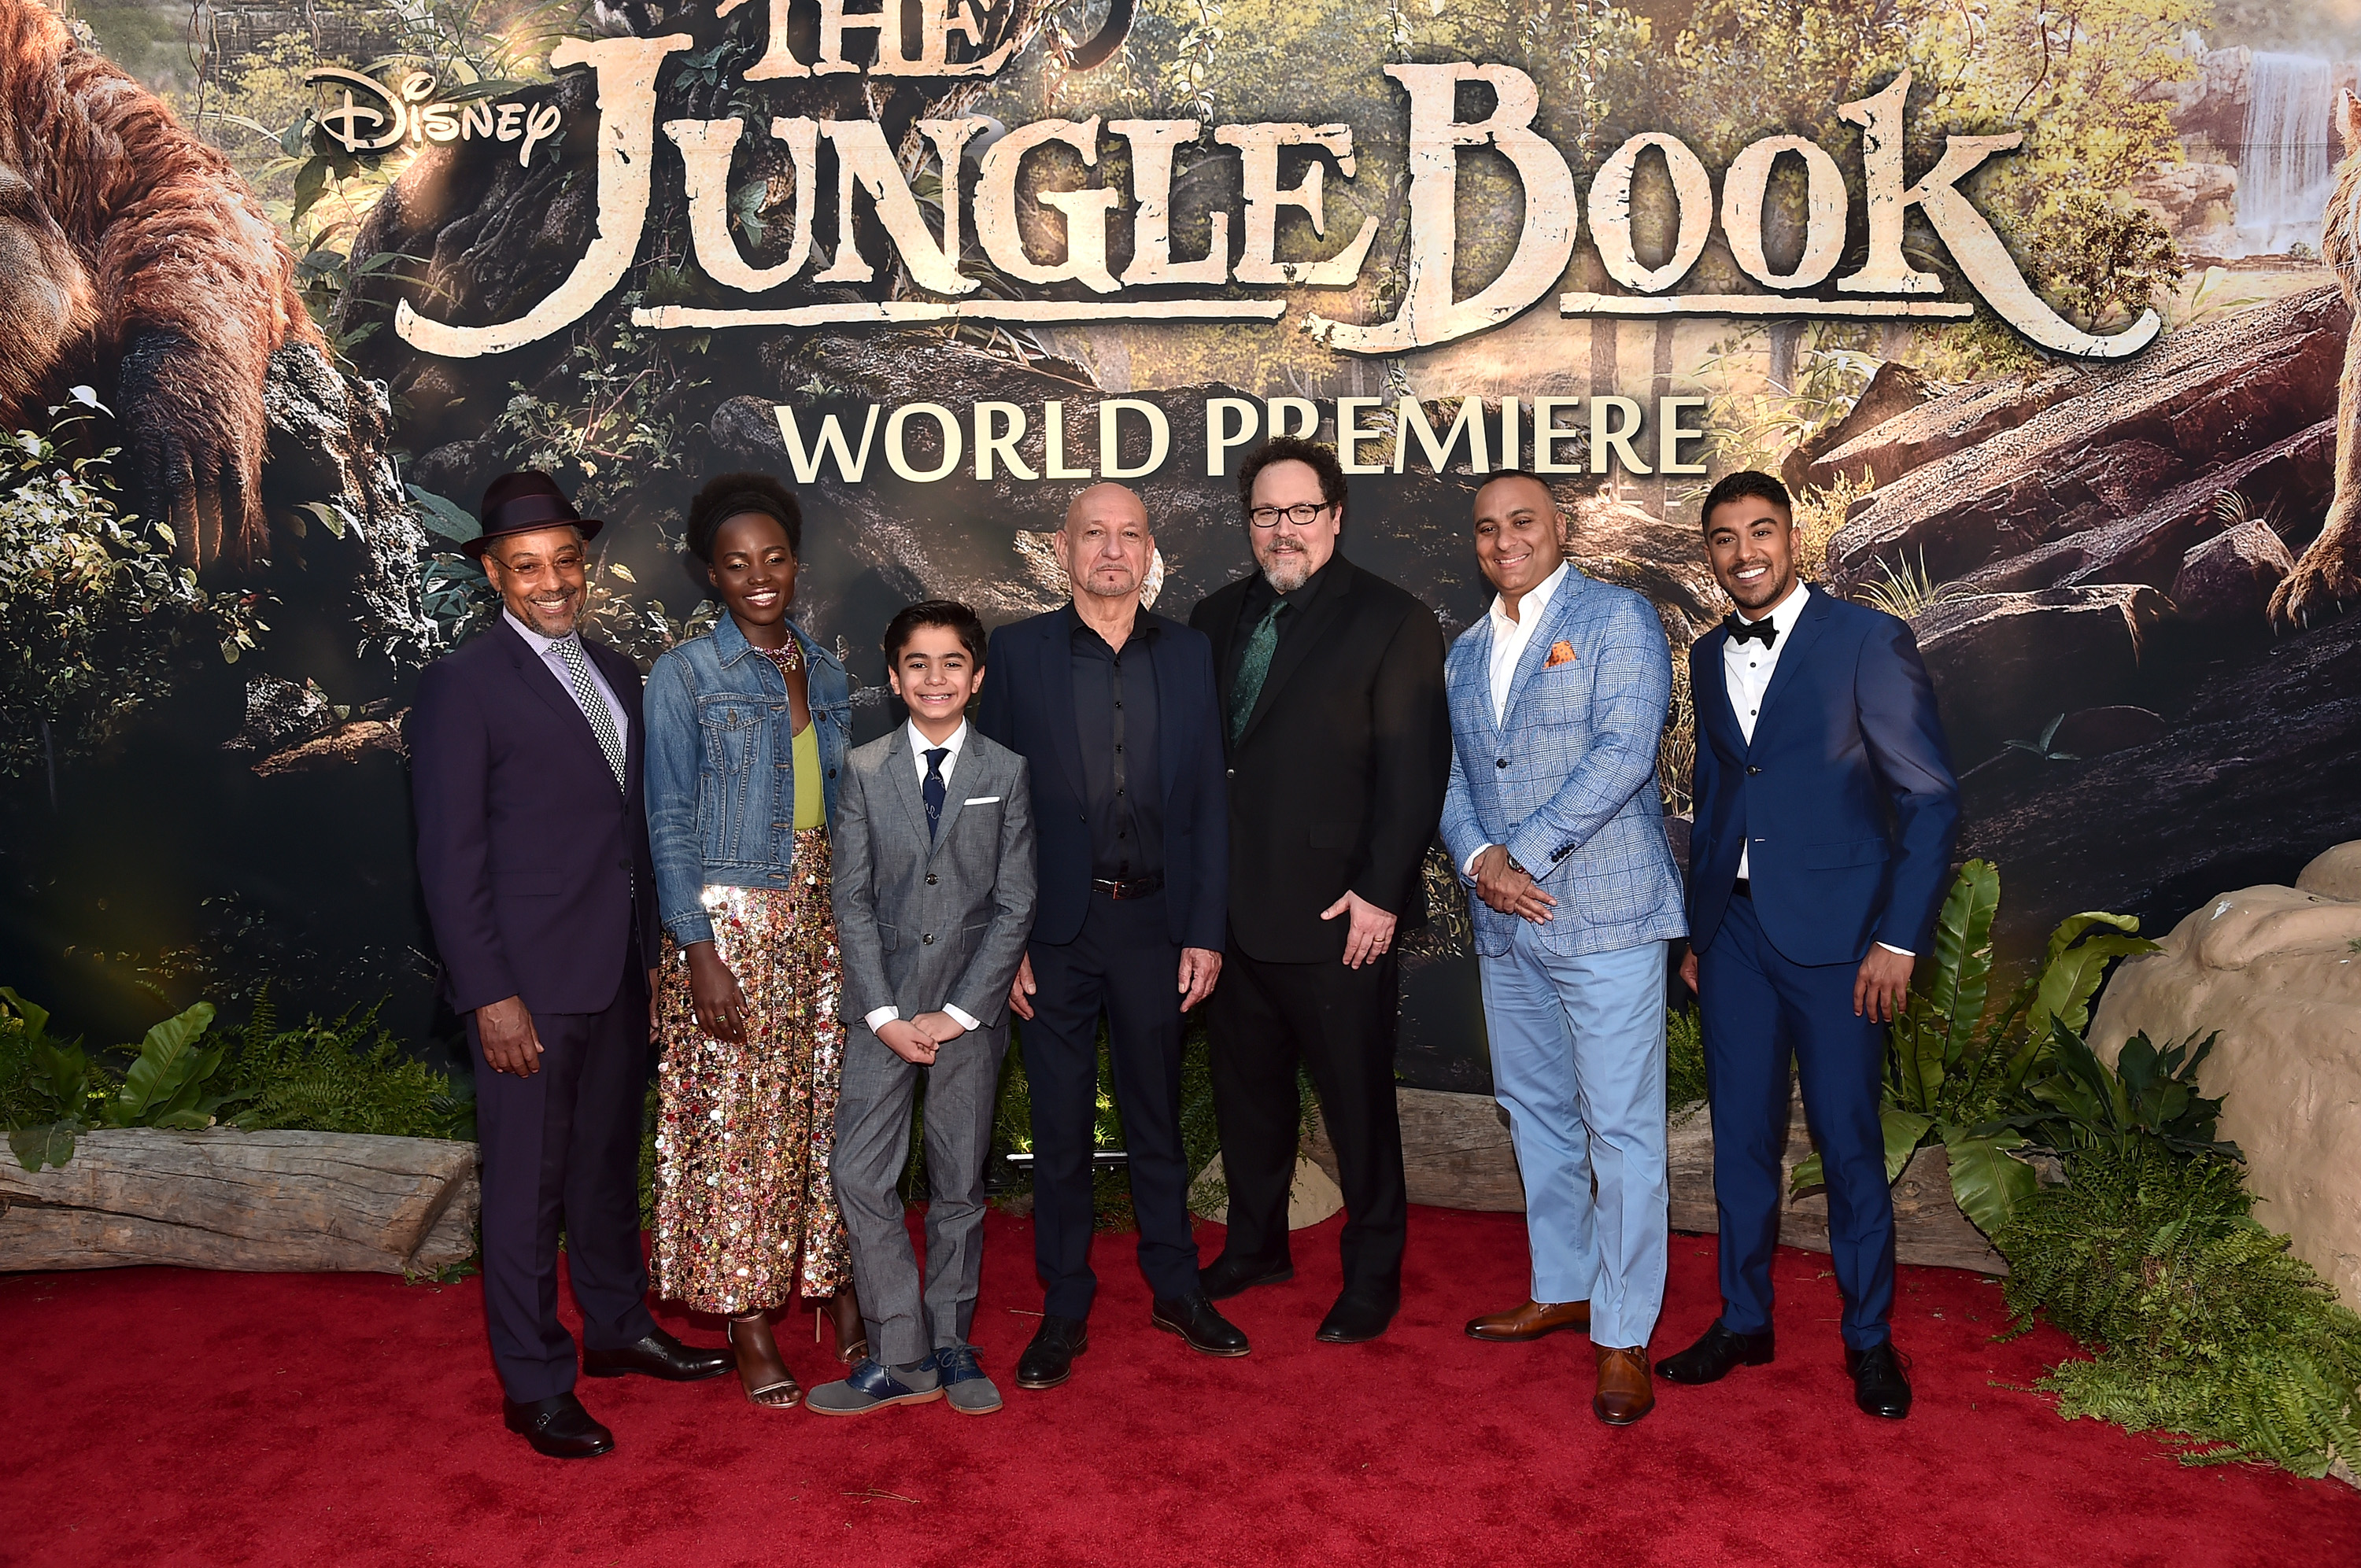 The Jungle Book World Premiere Photos3000 x 1993